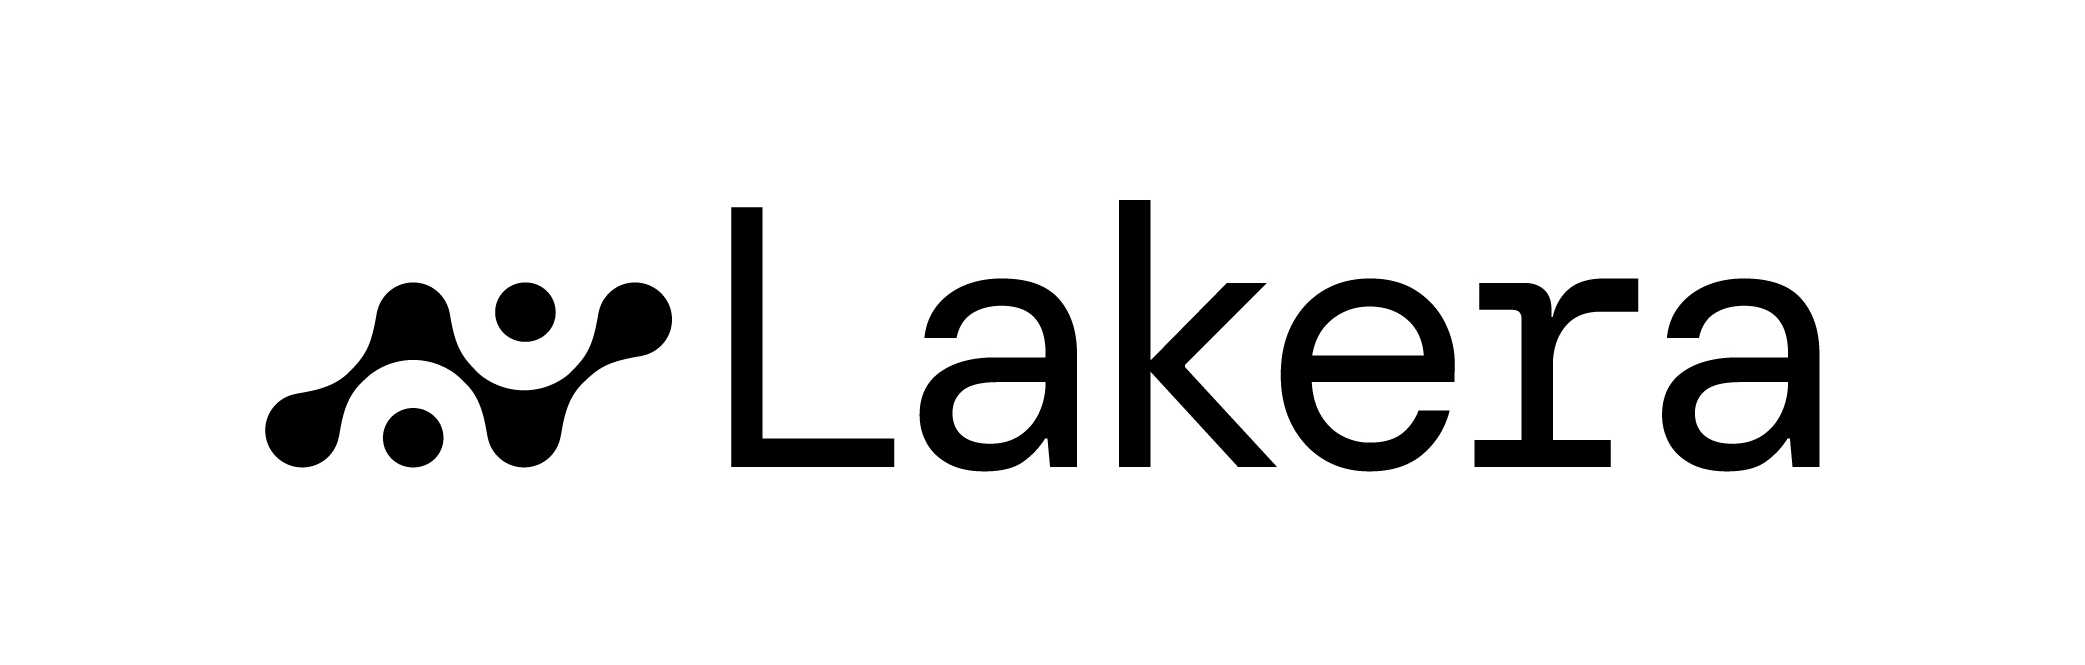 Lakera logo